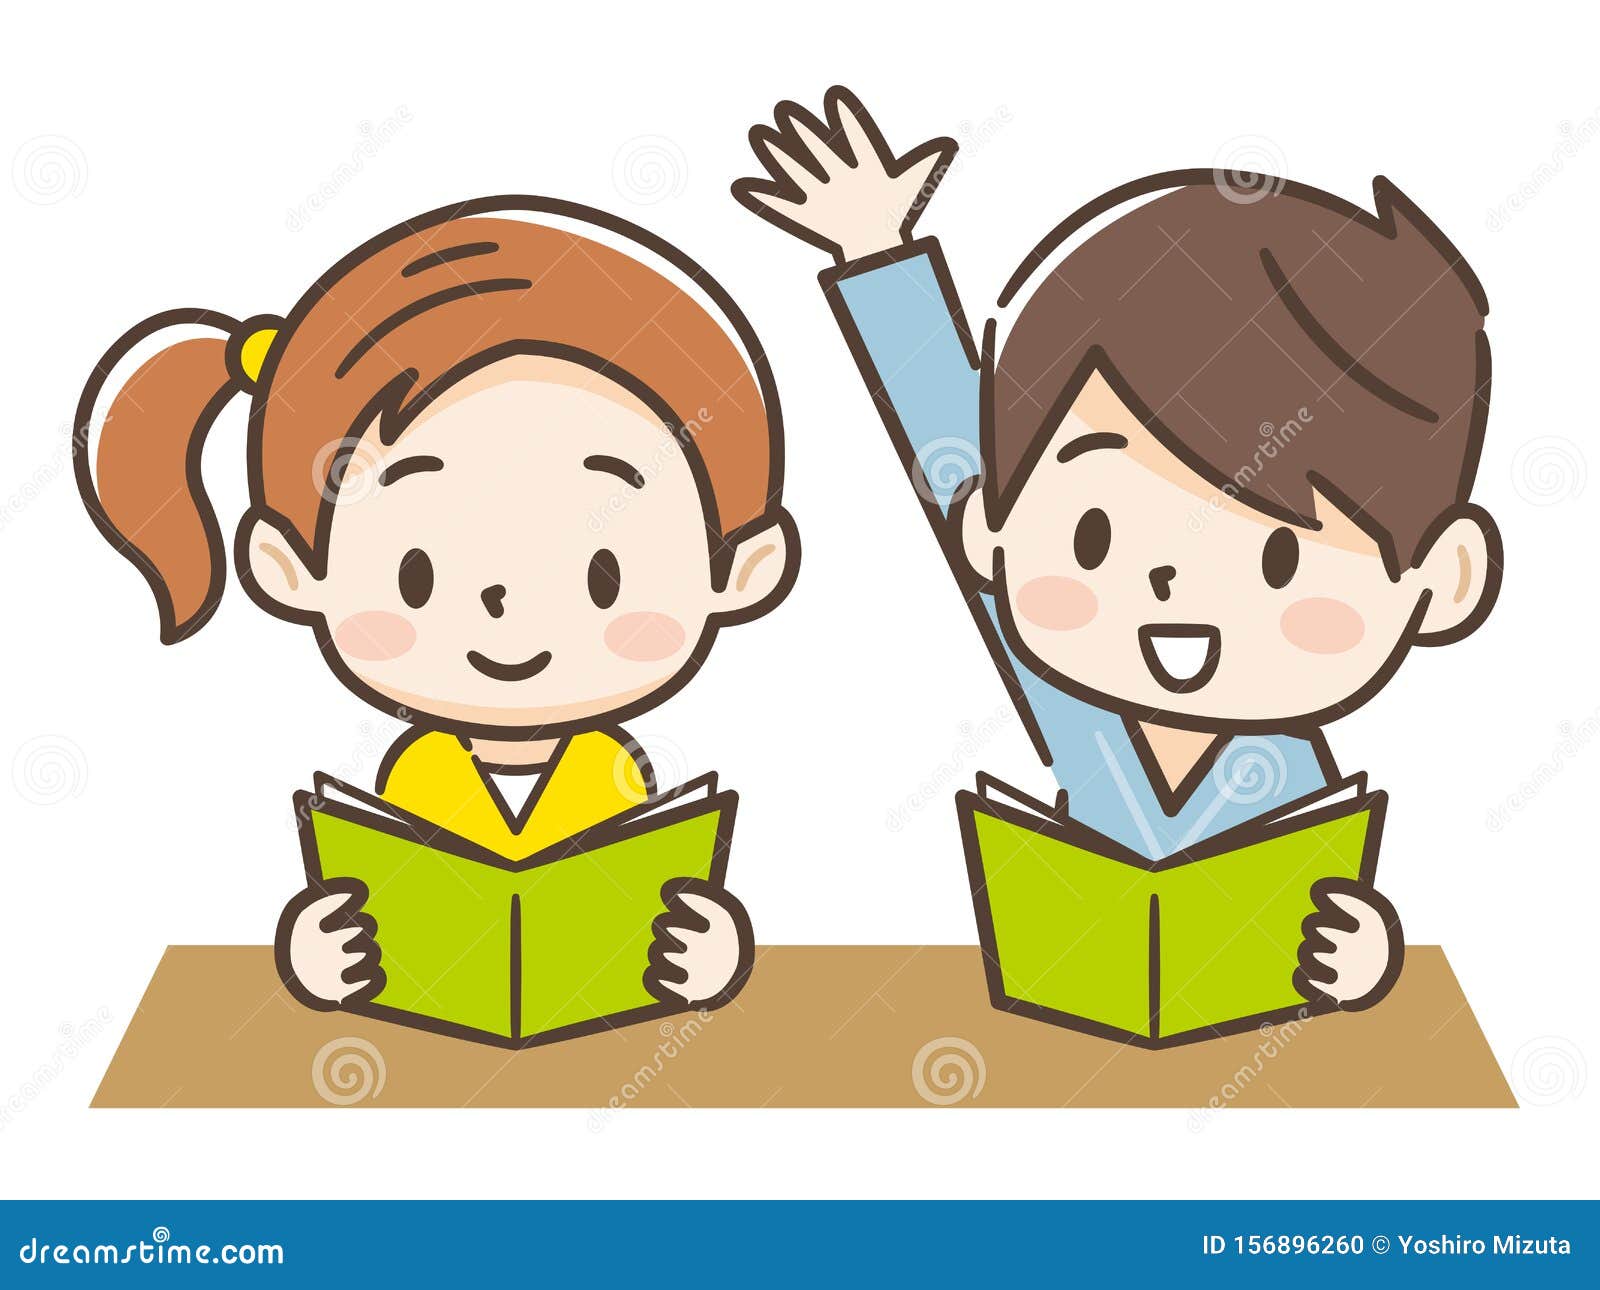 Illustration of Children in Class Stock Vector - Illustration of ...